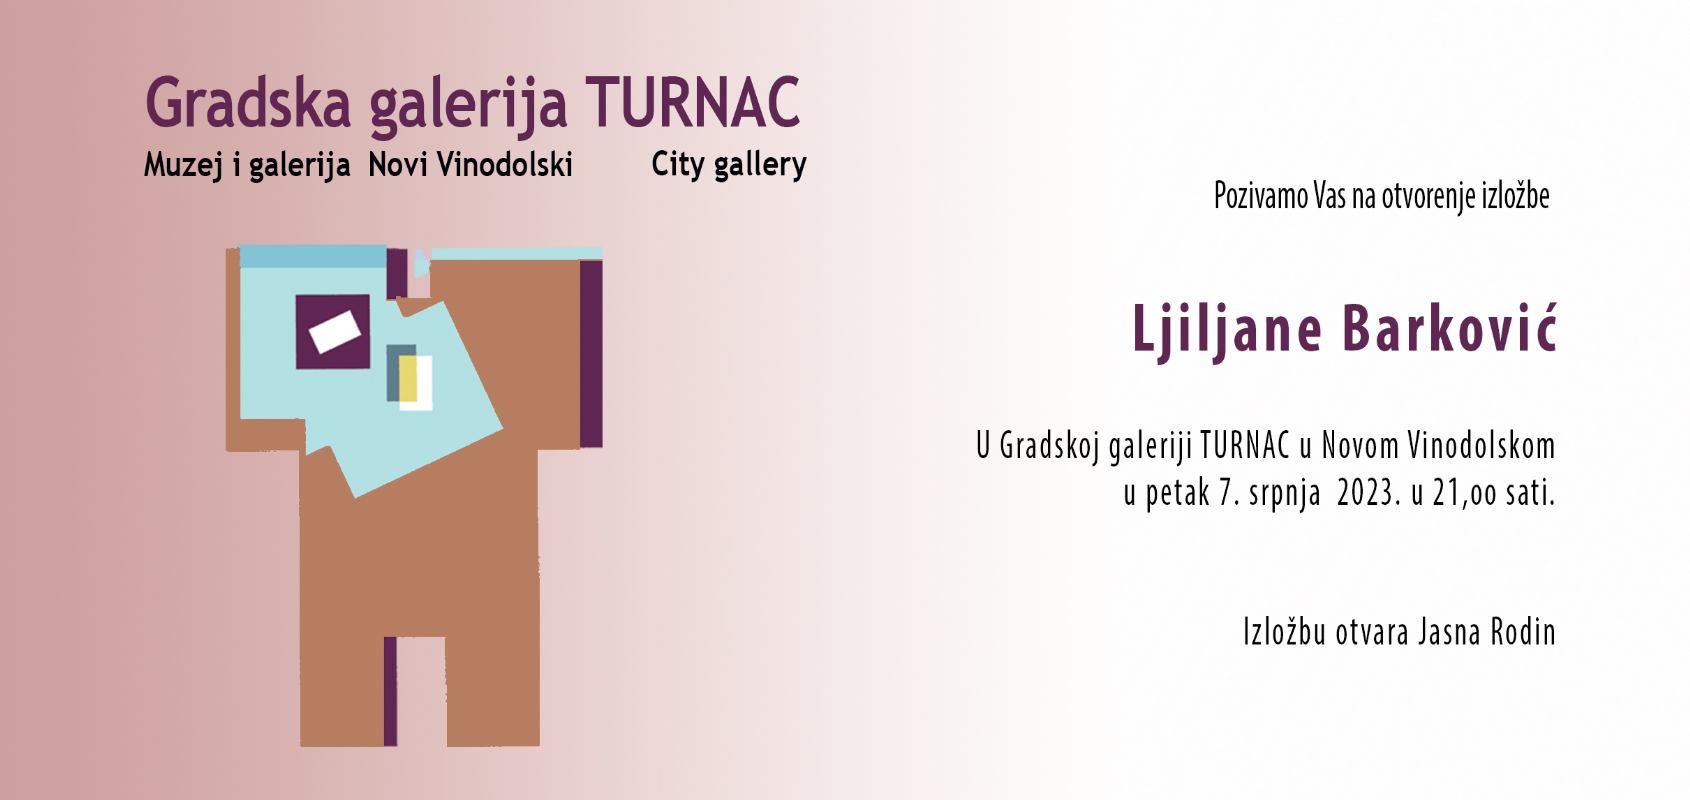 Izložbeni program Gradske galerije Turnac